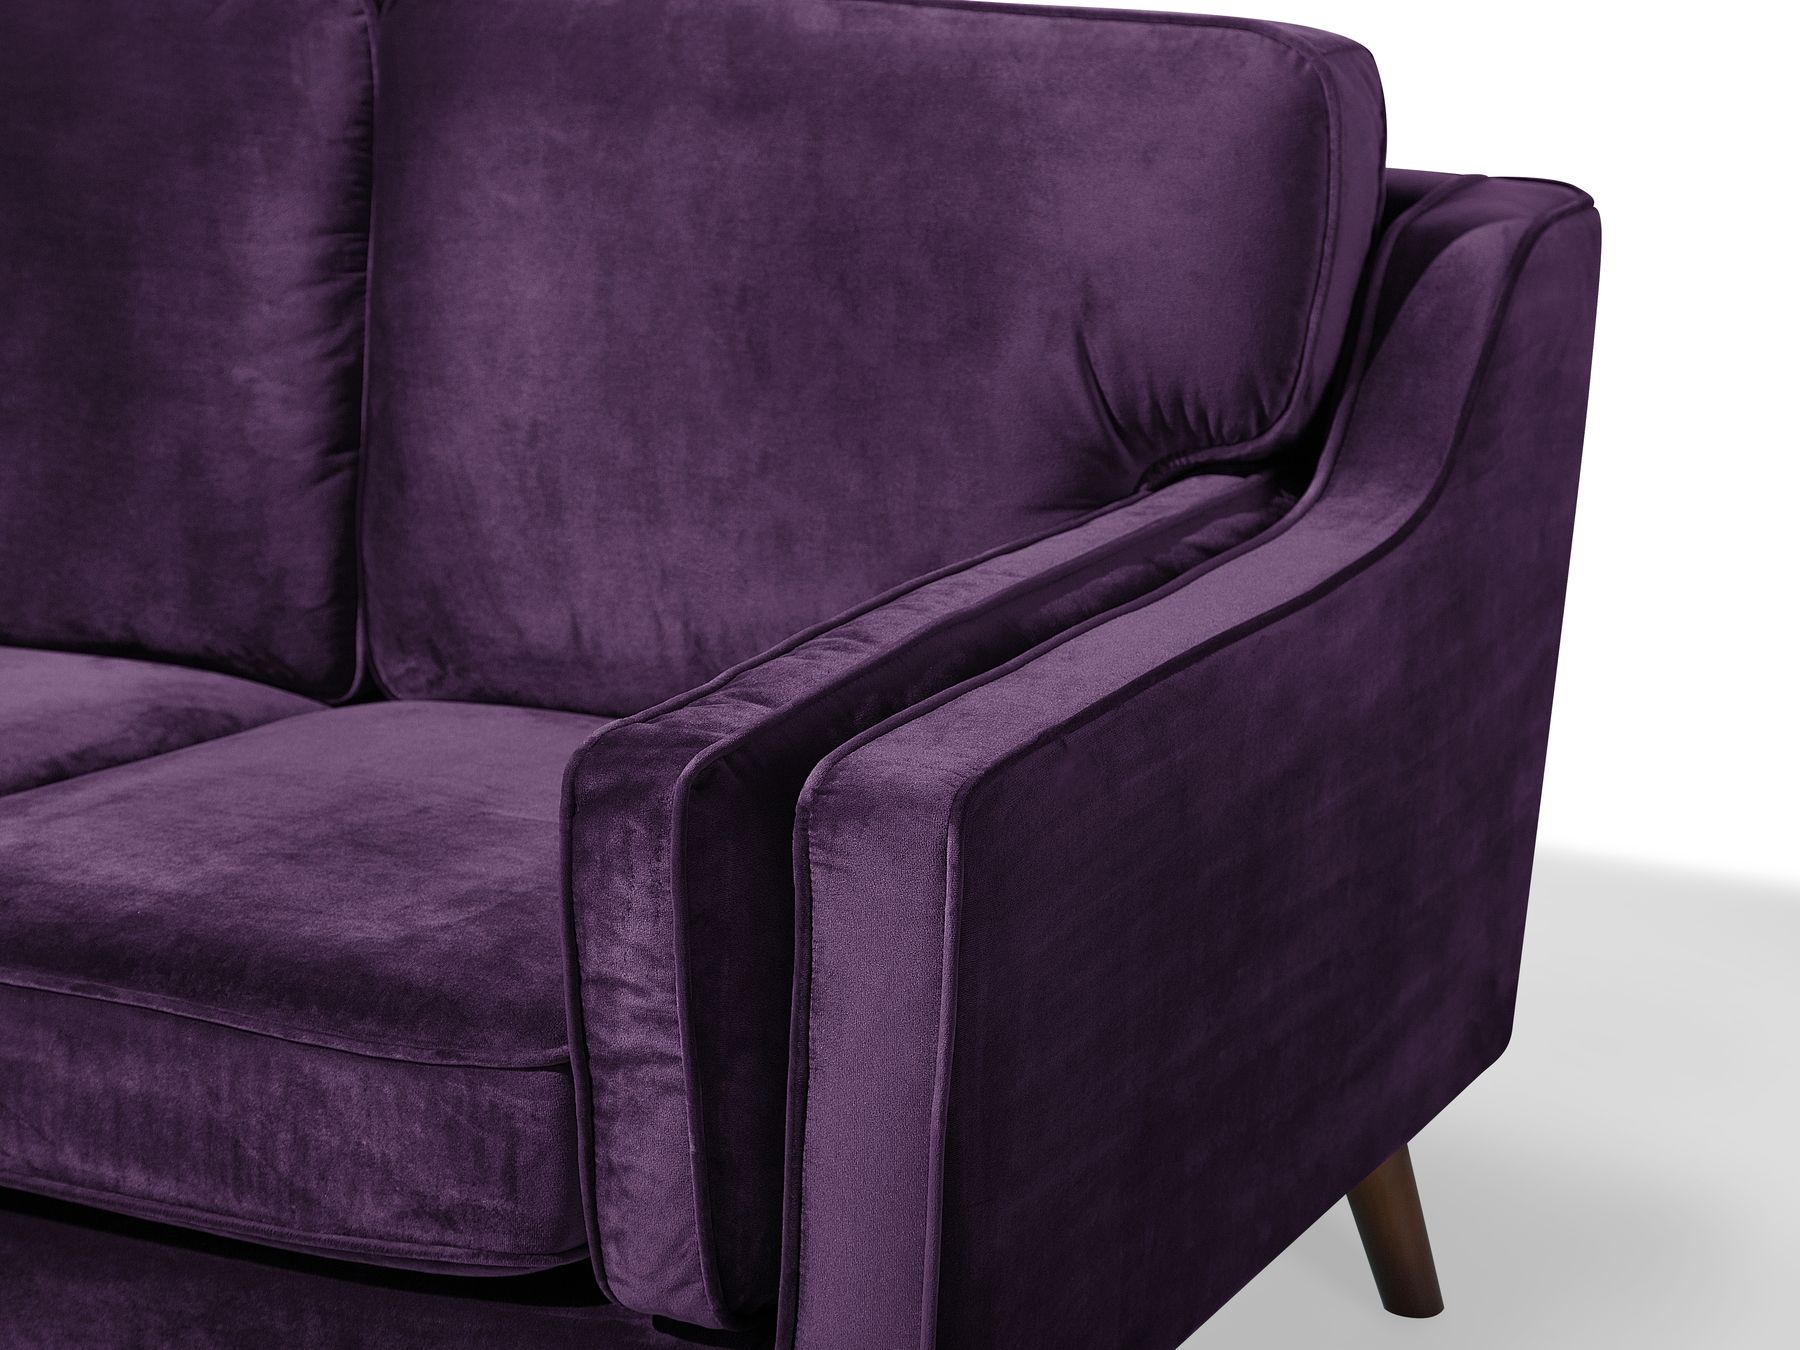 Lokka Sofa Set Velvet (Purple)